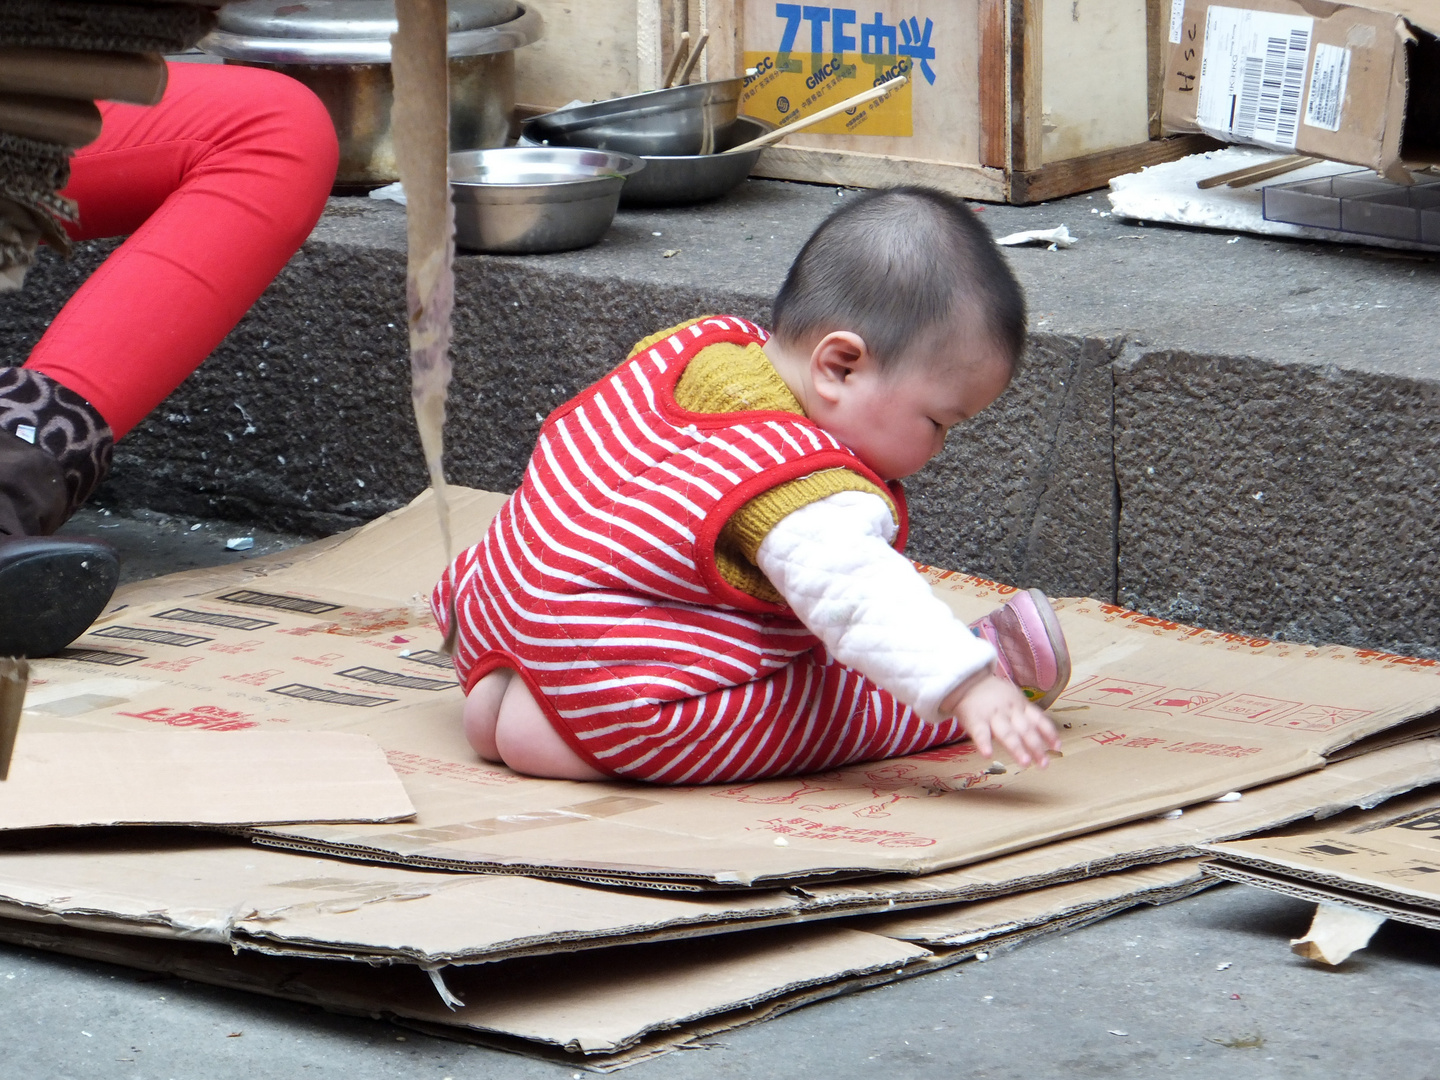 Kinderbetreuung auf Wellpappe - Shanghai, China